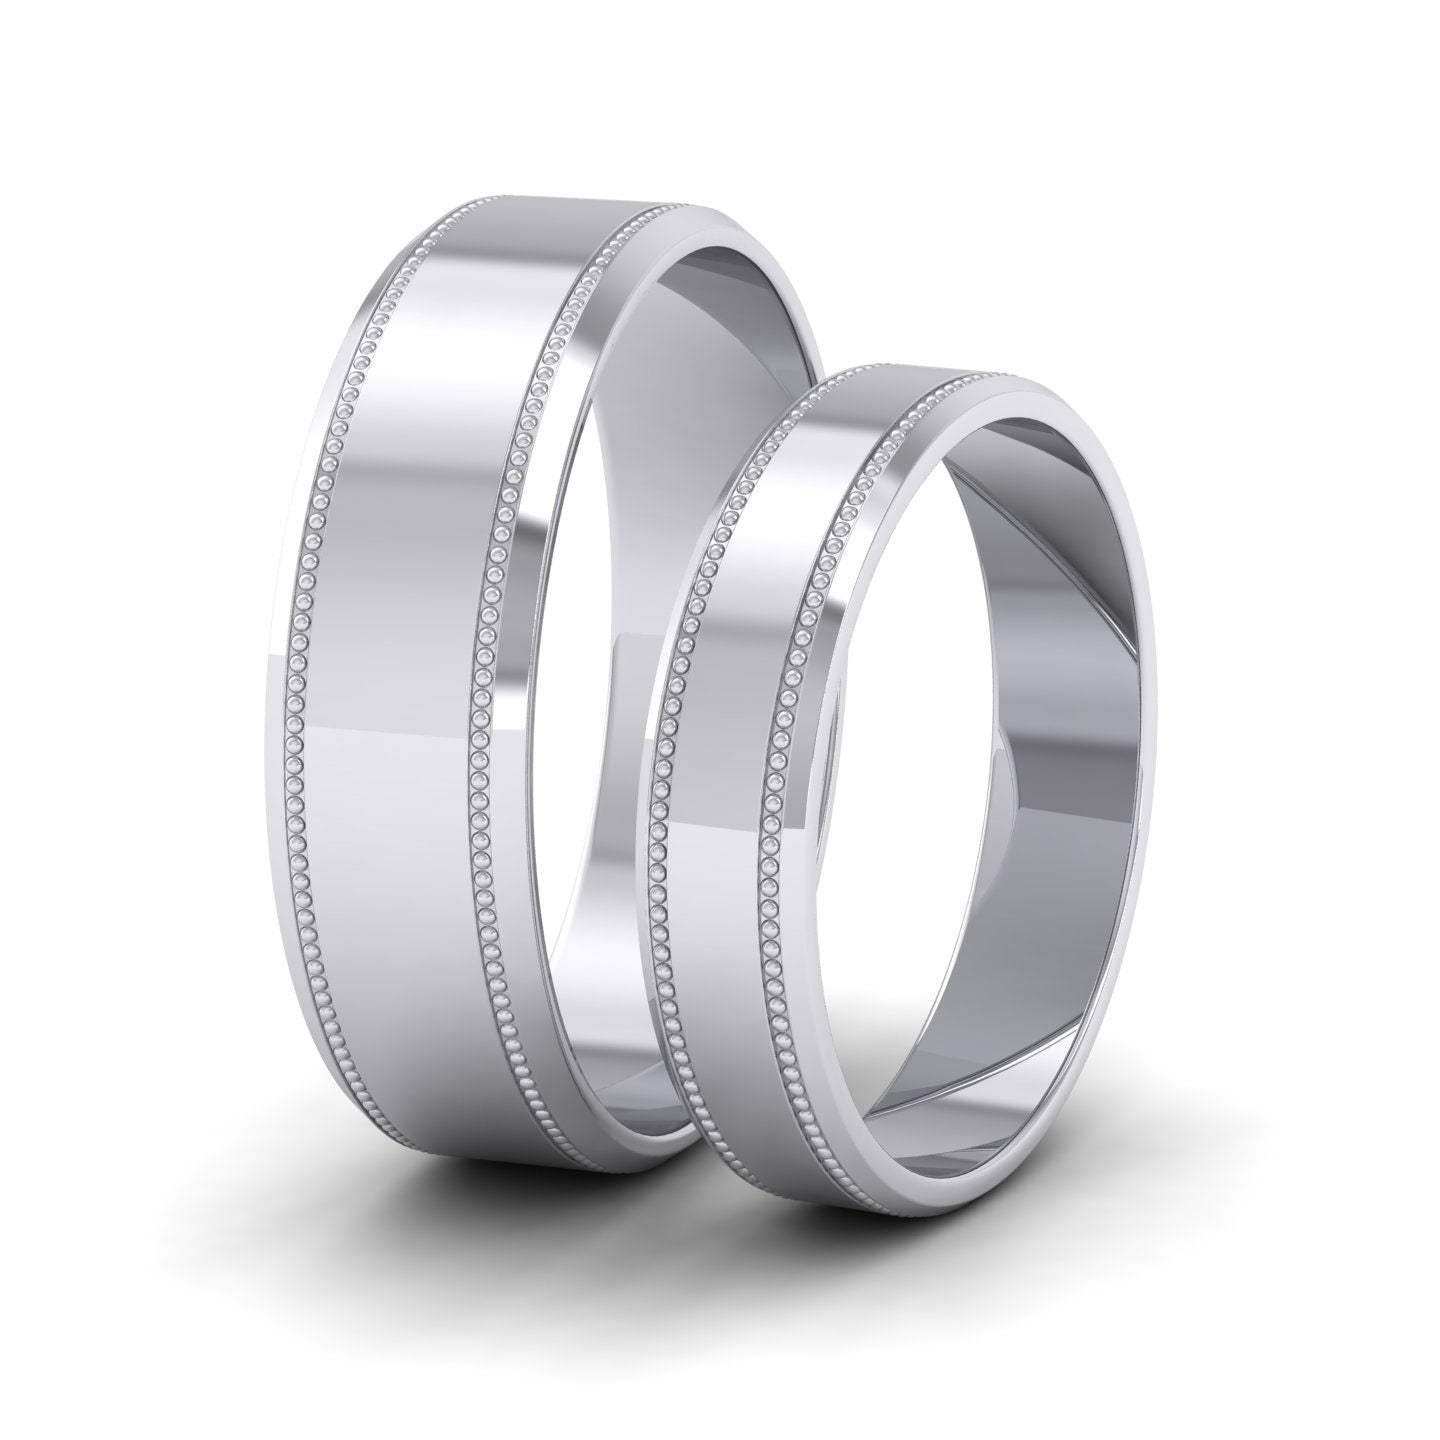 Bevelled Edge And Millgrain Pattern 500 Palladium 4mm Flat Wedding Ring